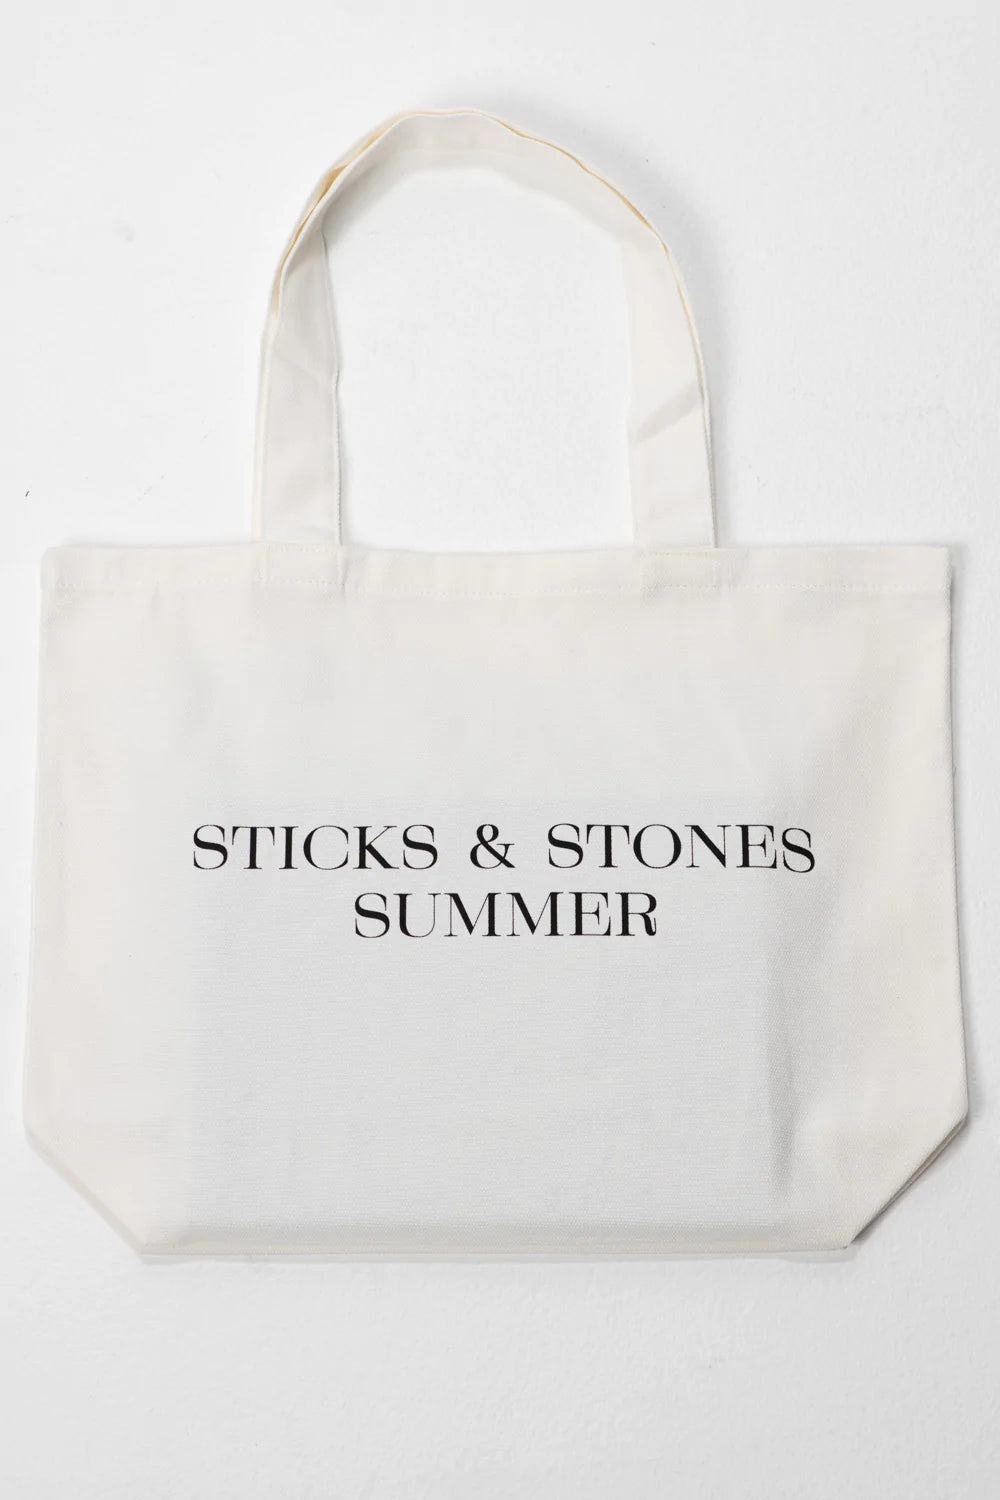 Sticks & Stones Summer pack